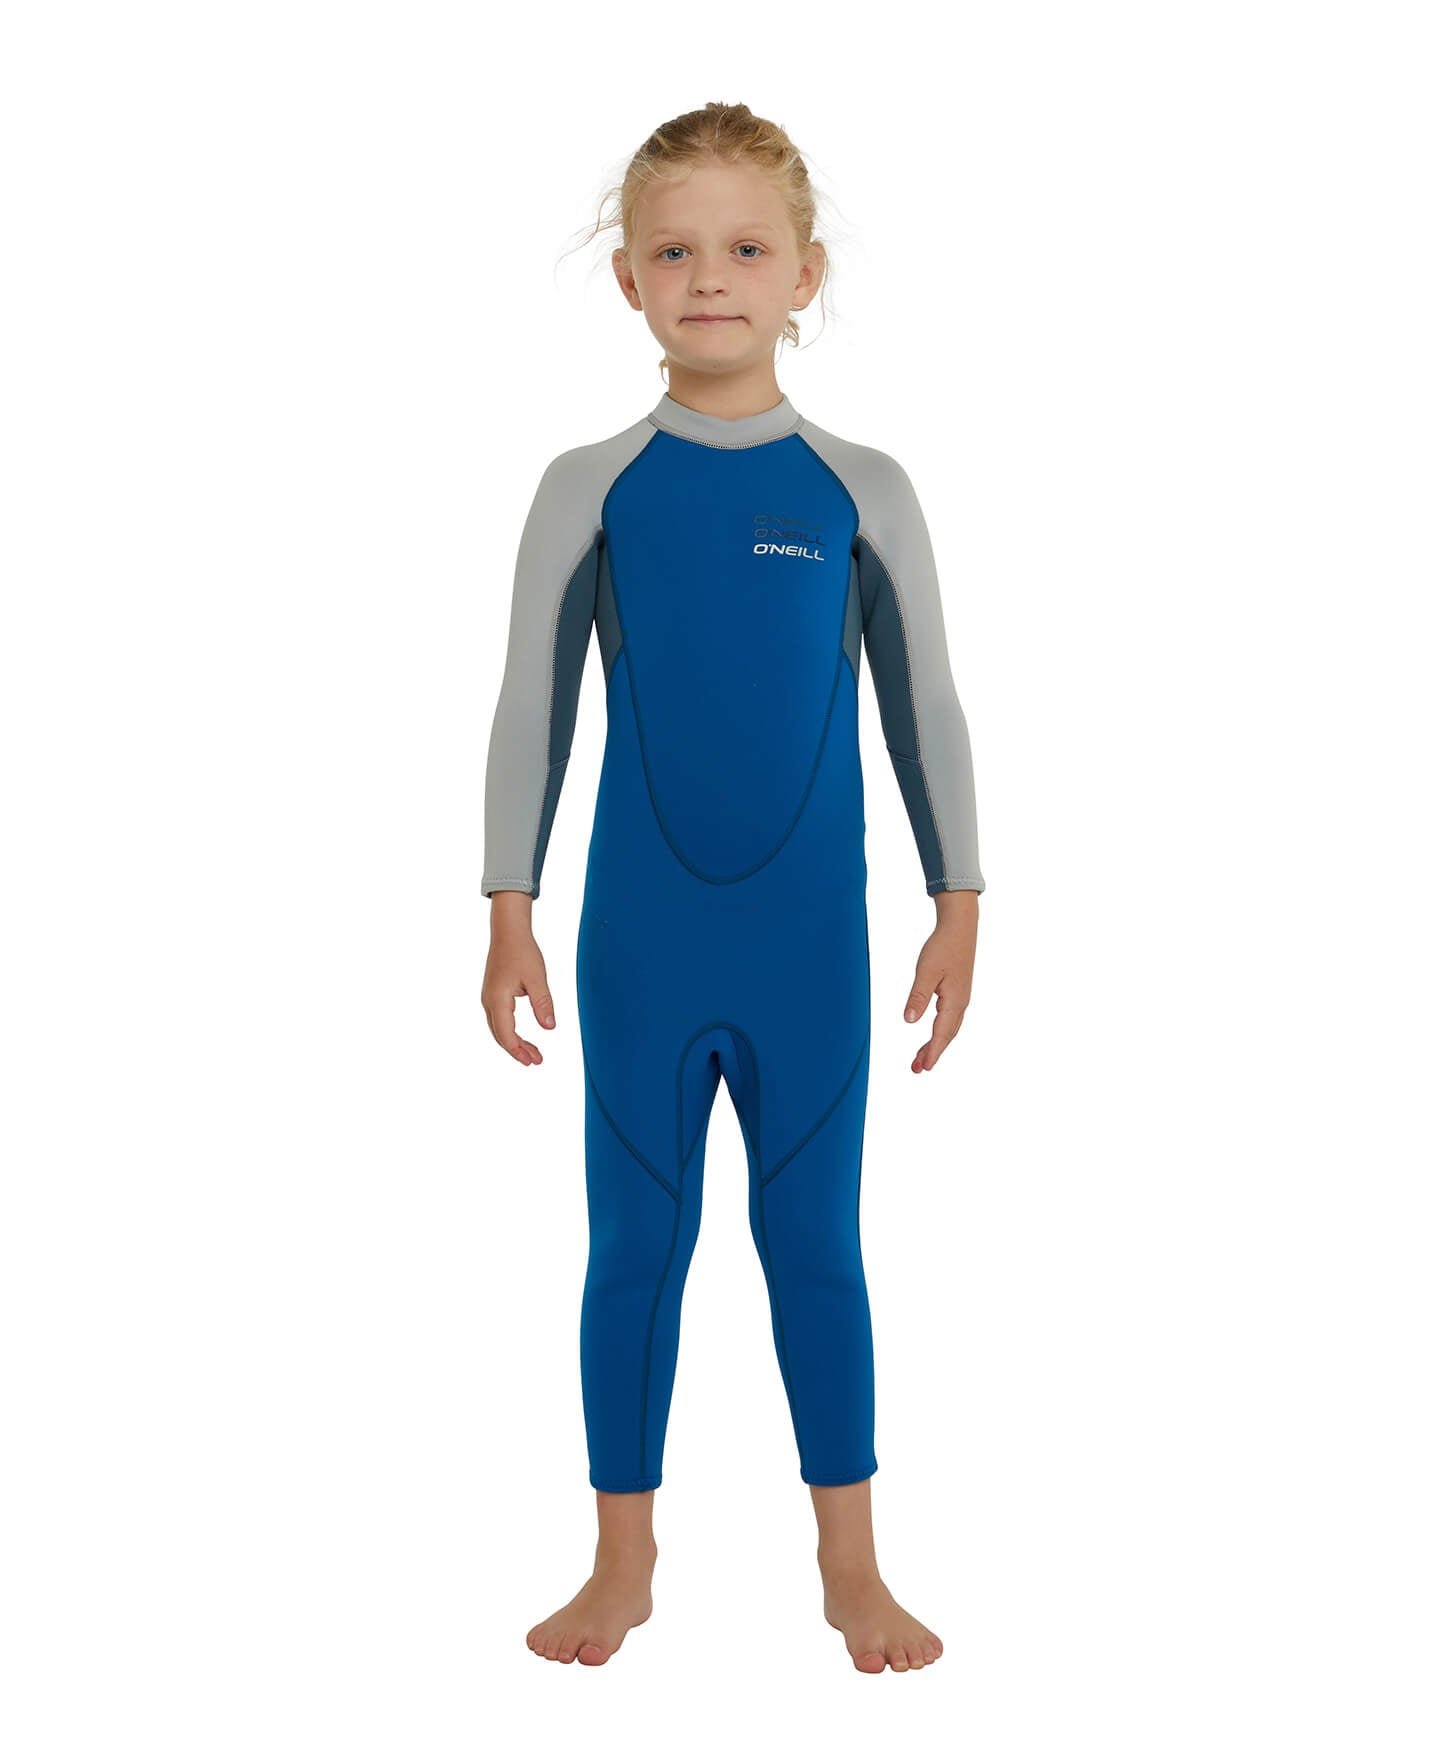 ONeill Reactor Toddler Boys Full 2mm Wetsuit - UltraBlu/Cadet/Cgrey